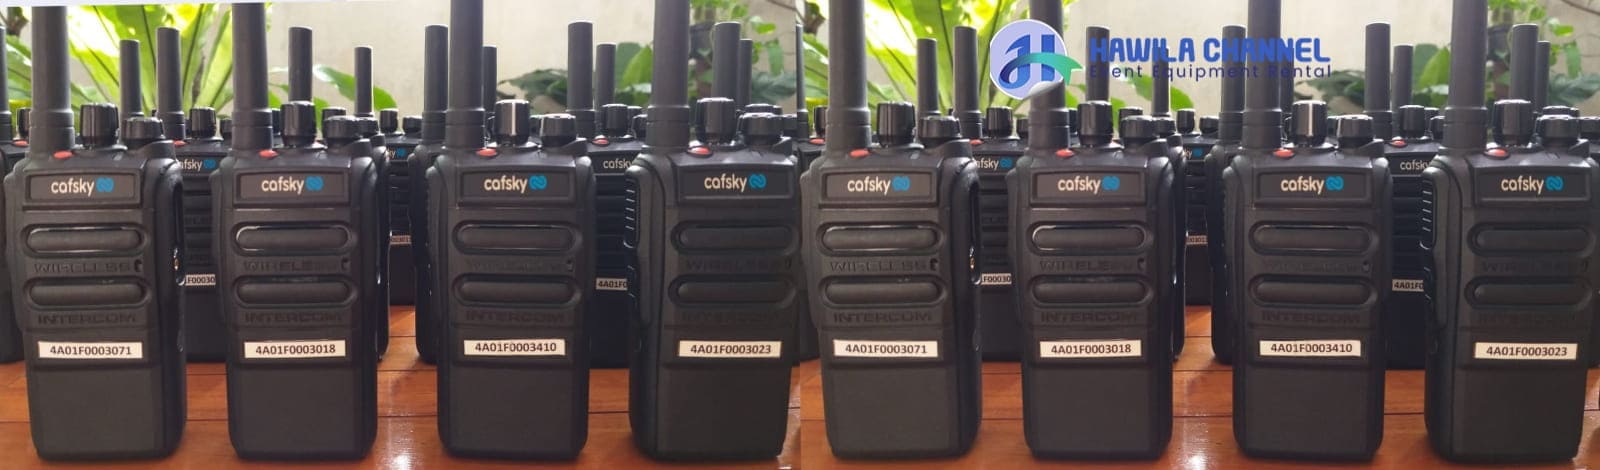 Handy-talky-Cafsky-Handy-Talky-POC-GSM